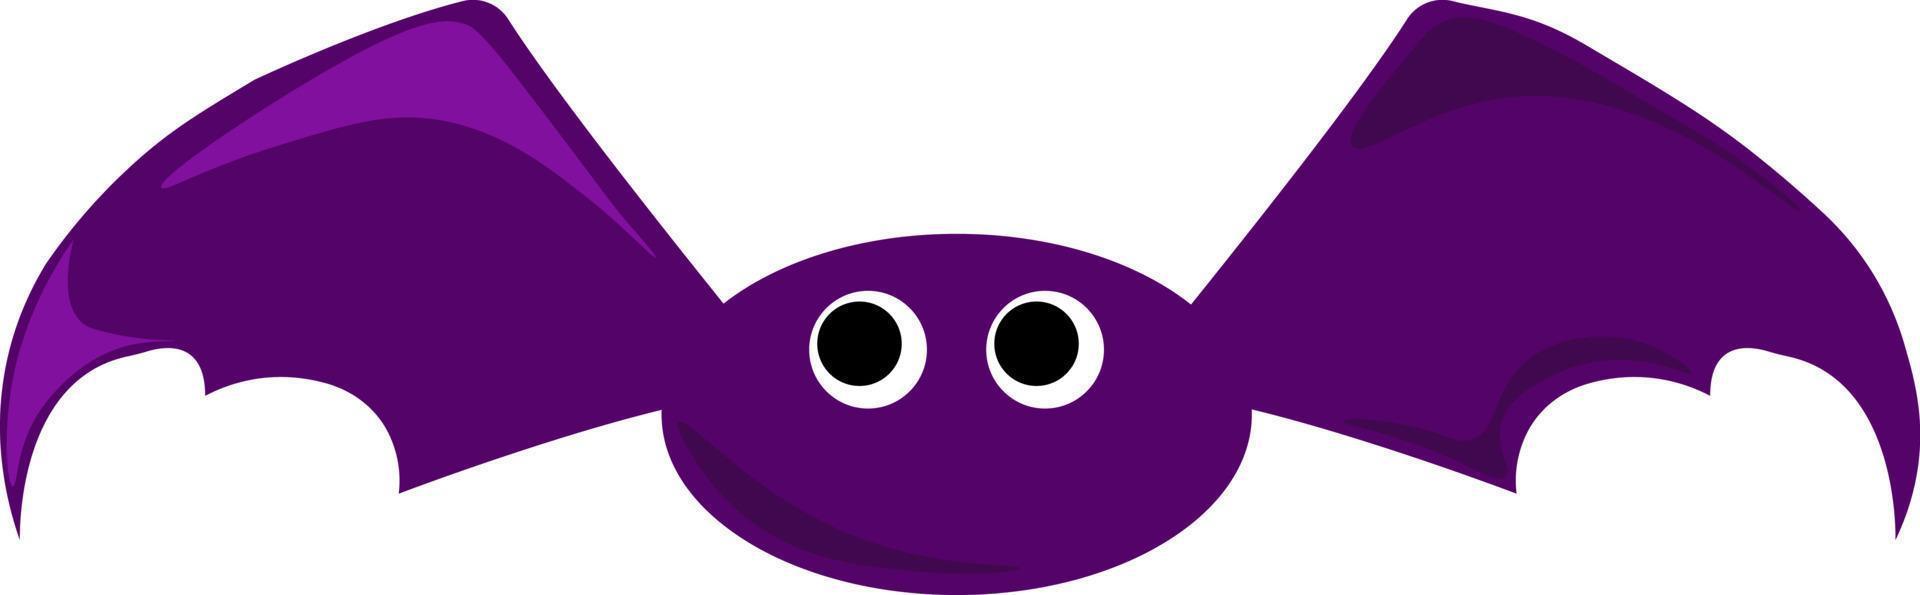 murciélago púrpura, ilustración, vector sobre fondo blanco.